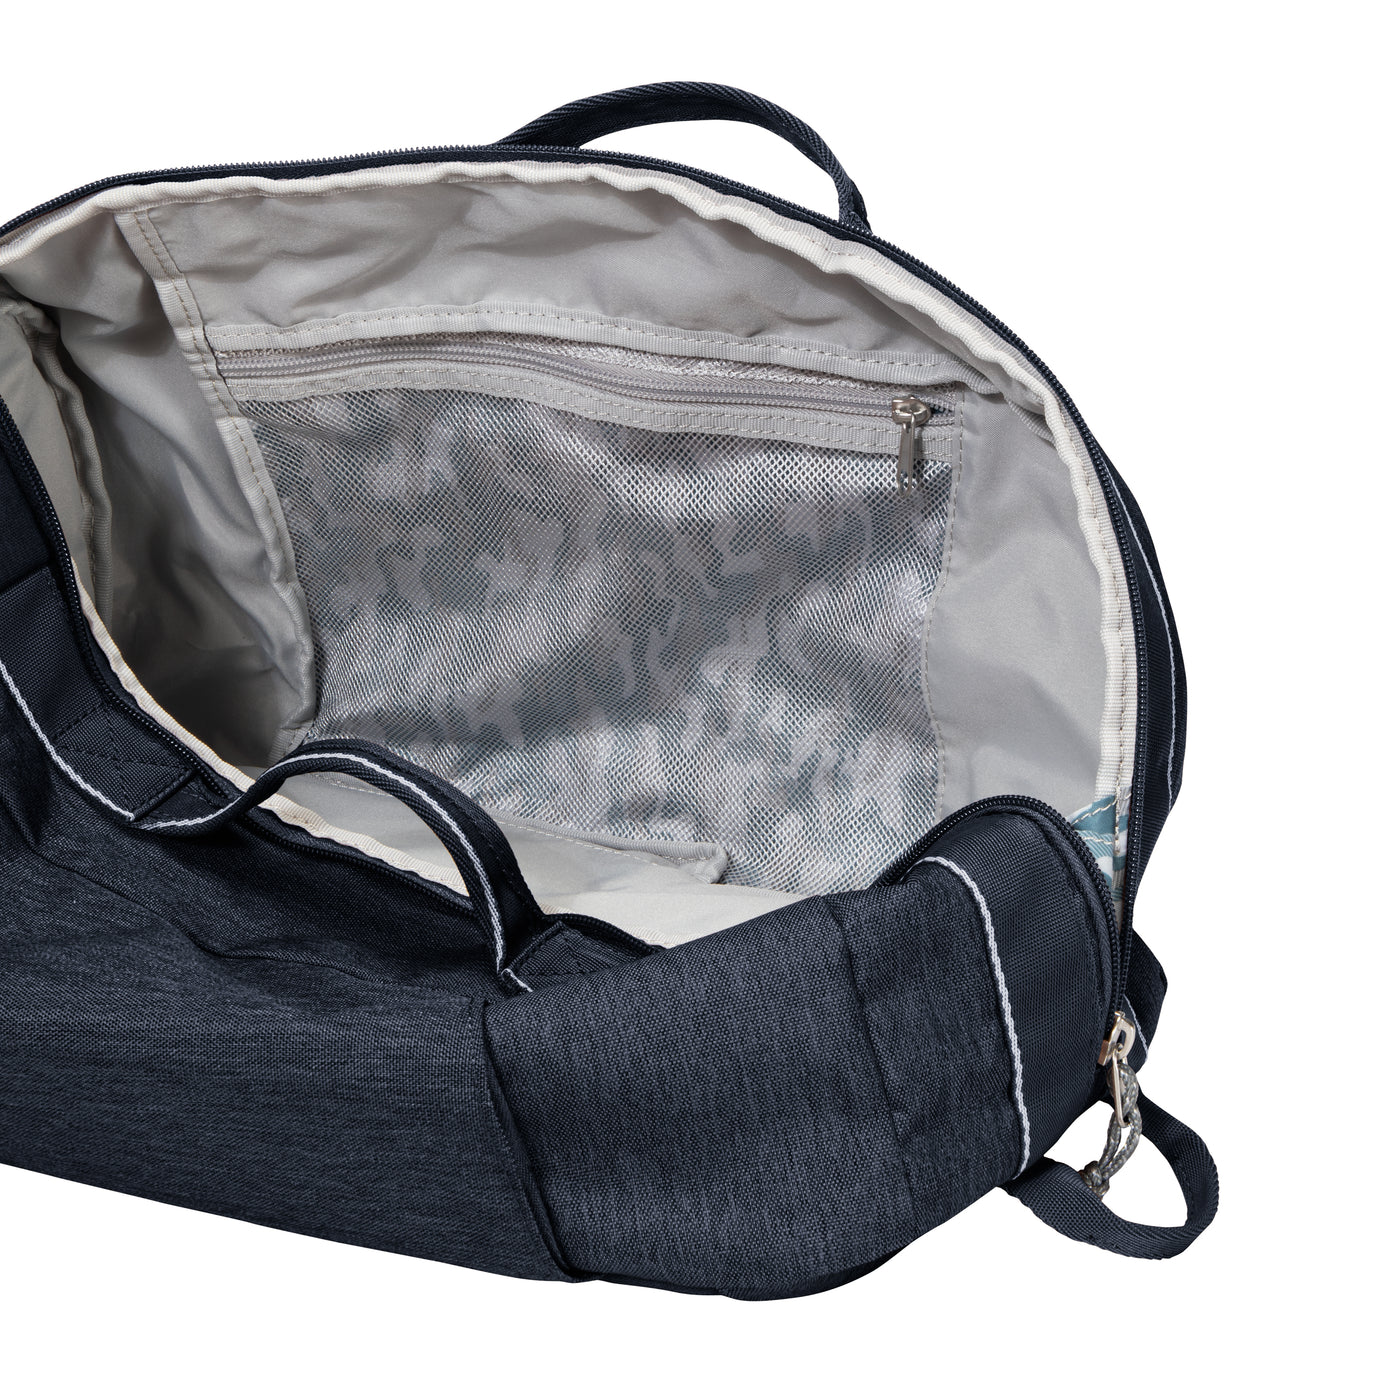 Rainier Compact Duffel Backpack - 30L